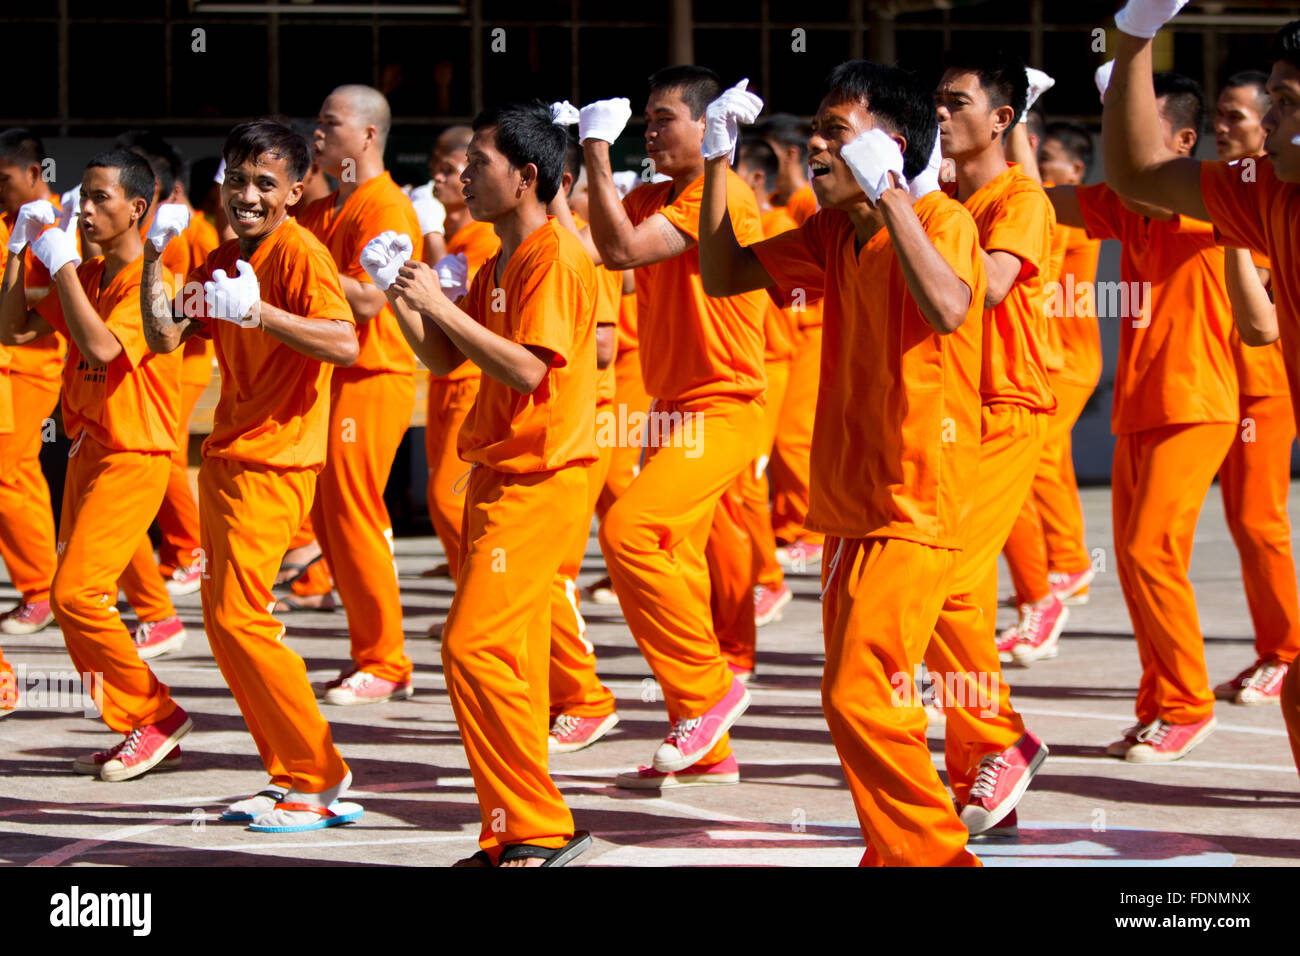 Dancing Inmates of the Cebu Provincial Detention and Rehabilitation Center, Cebu City,Philippines Stock Photo